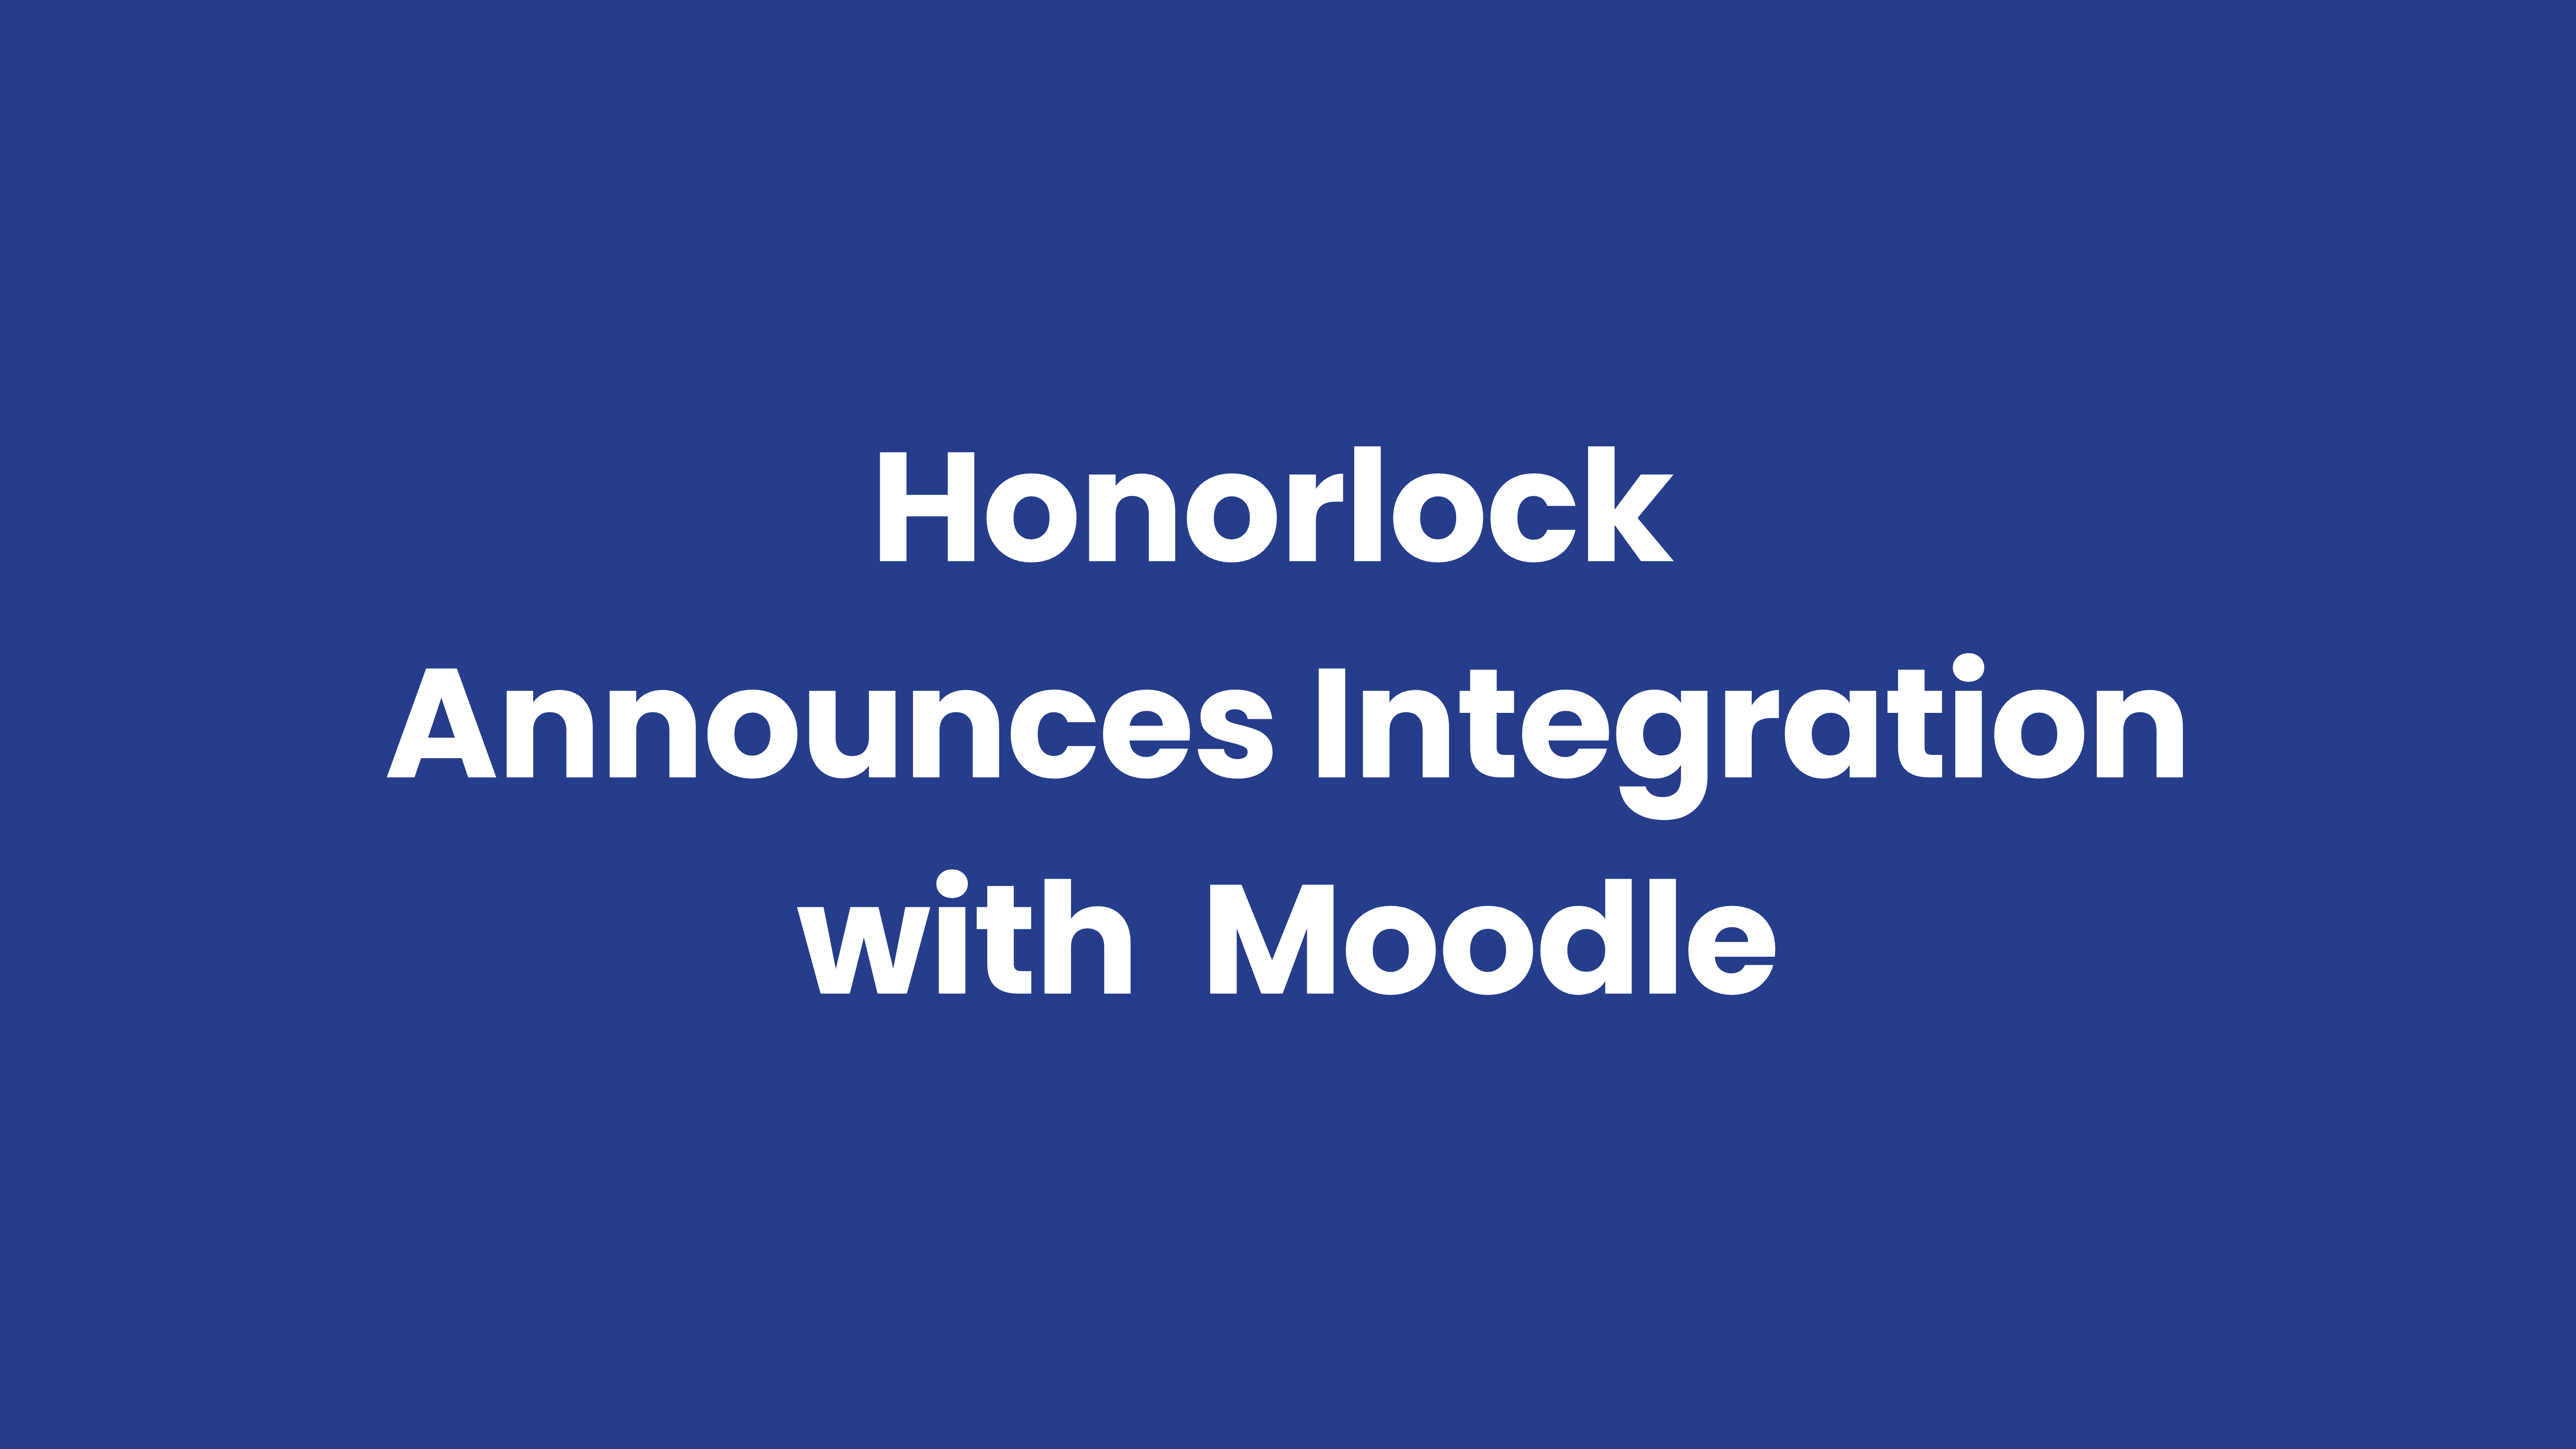 Honorlock Announces Integration with Major Open Source Learning Management Software Platform Moodle